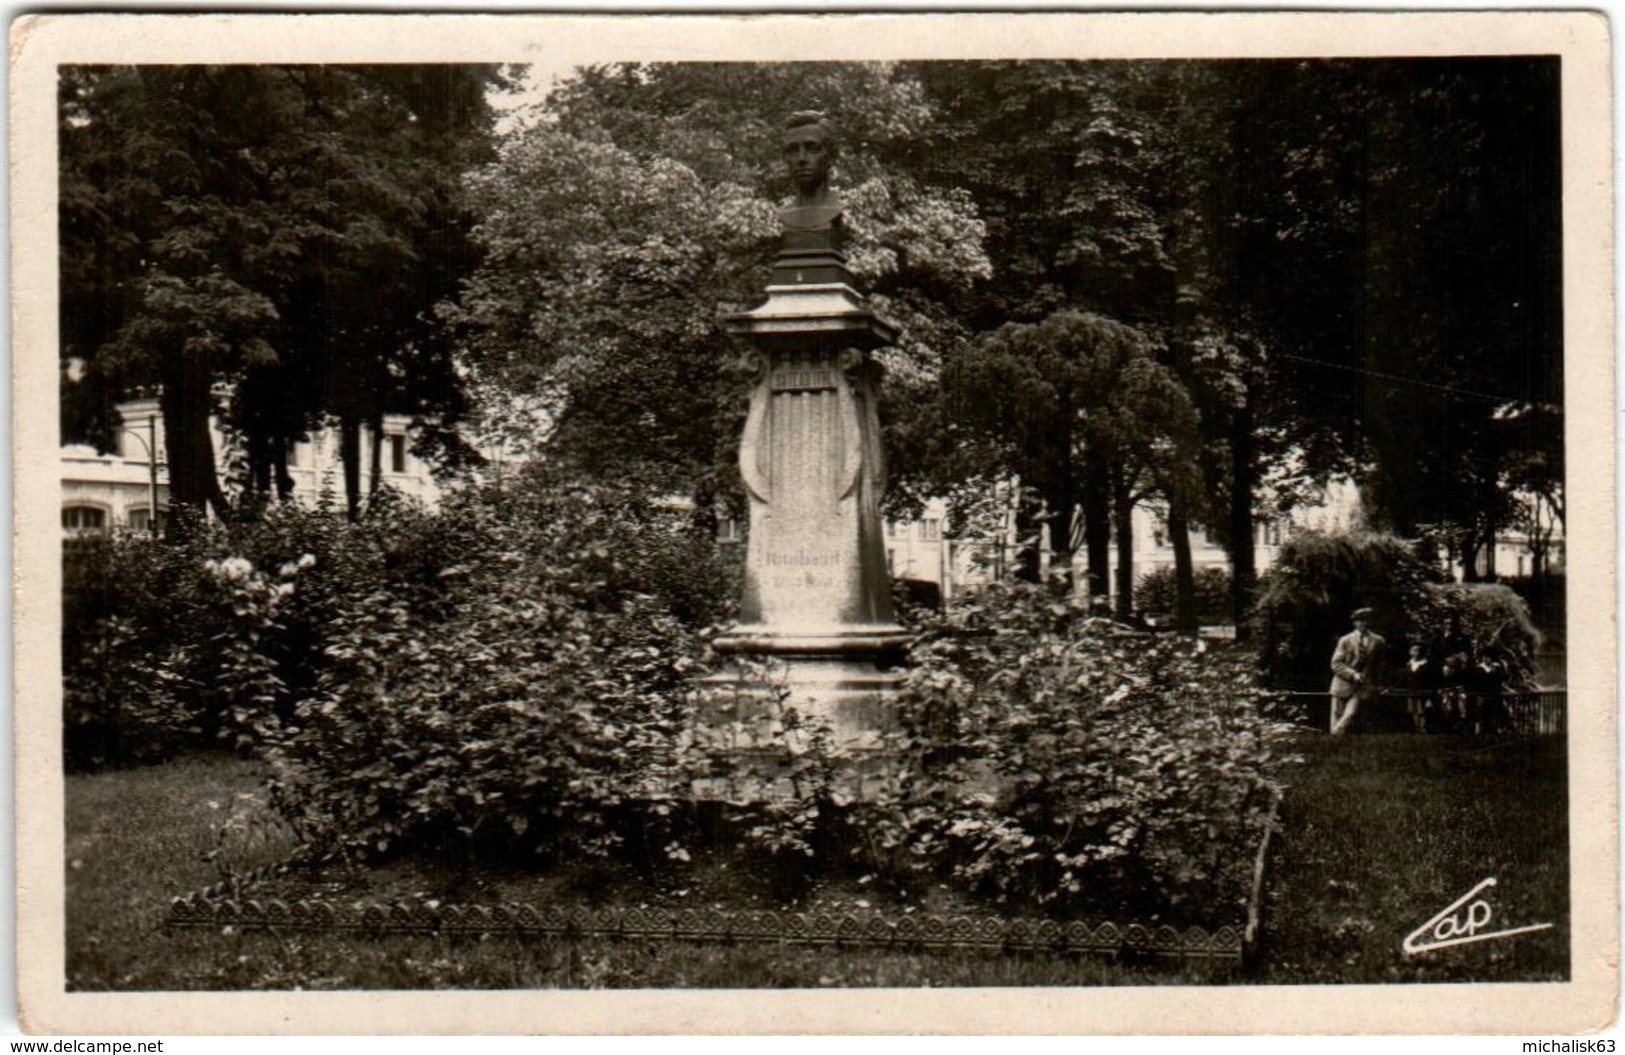 3YST 618 CHARLEVILLE - MONUMENT A. RIMBAUD - Charleville